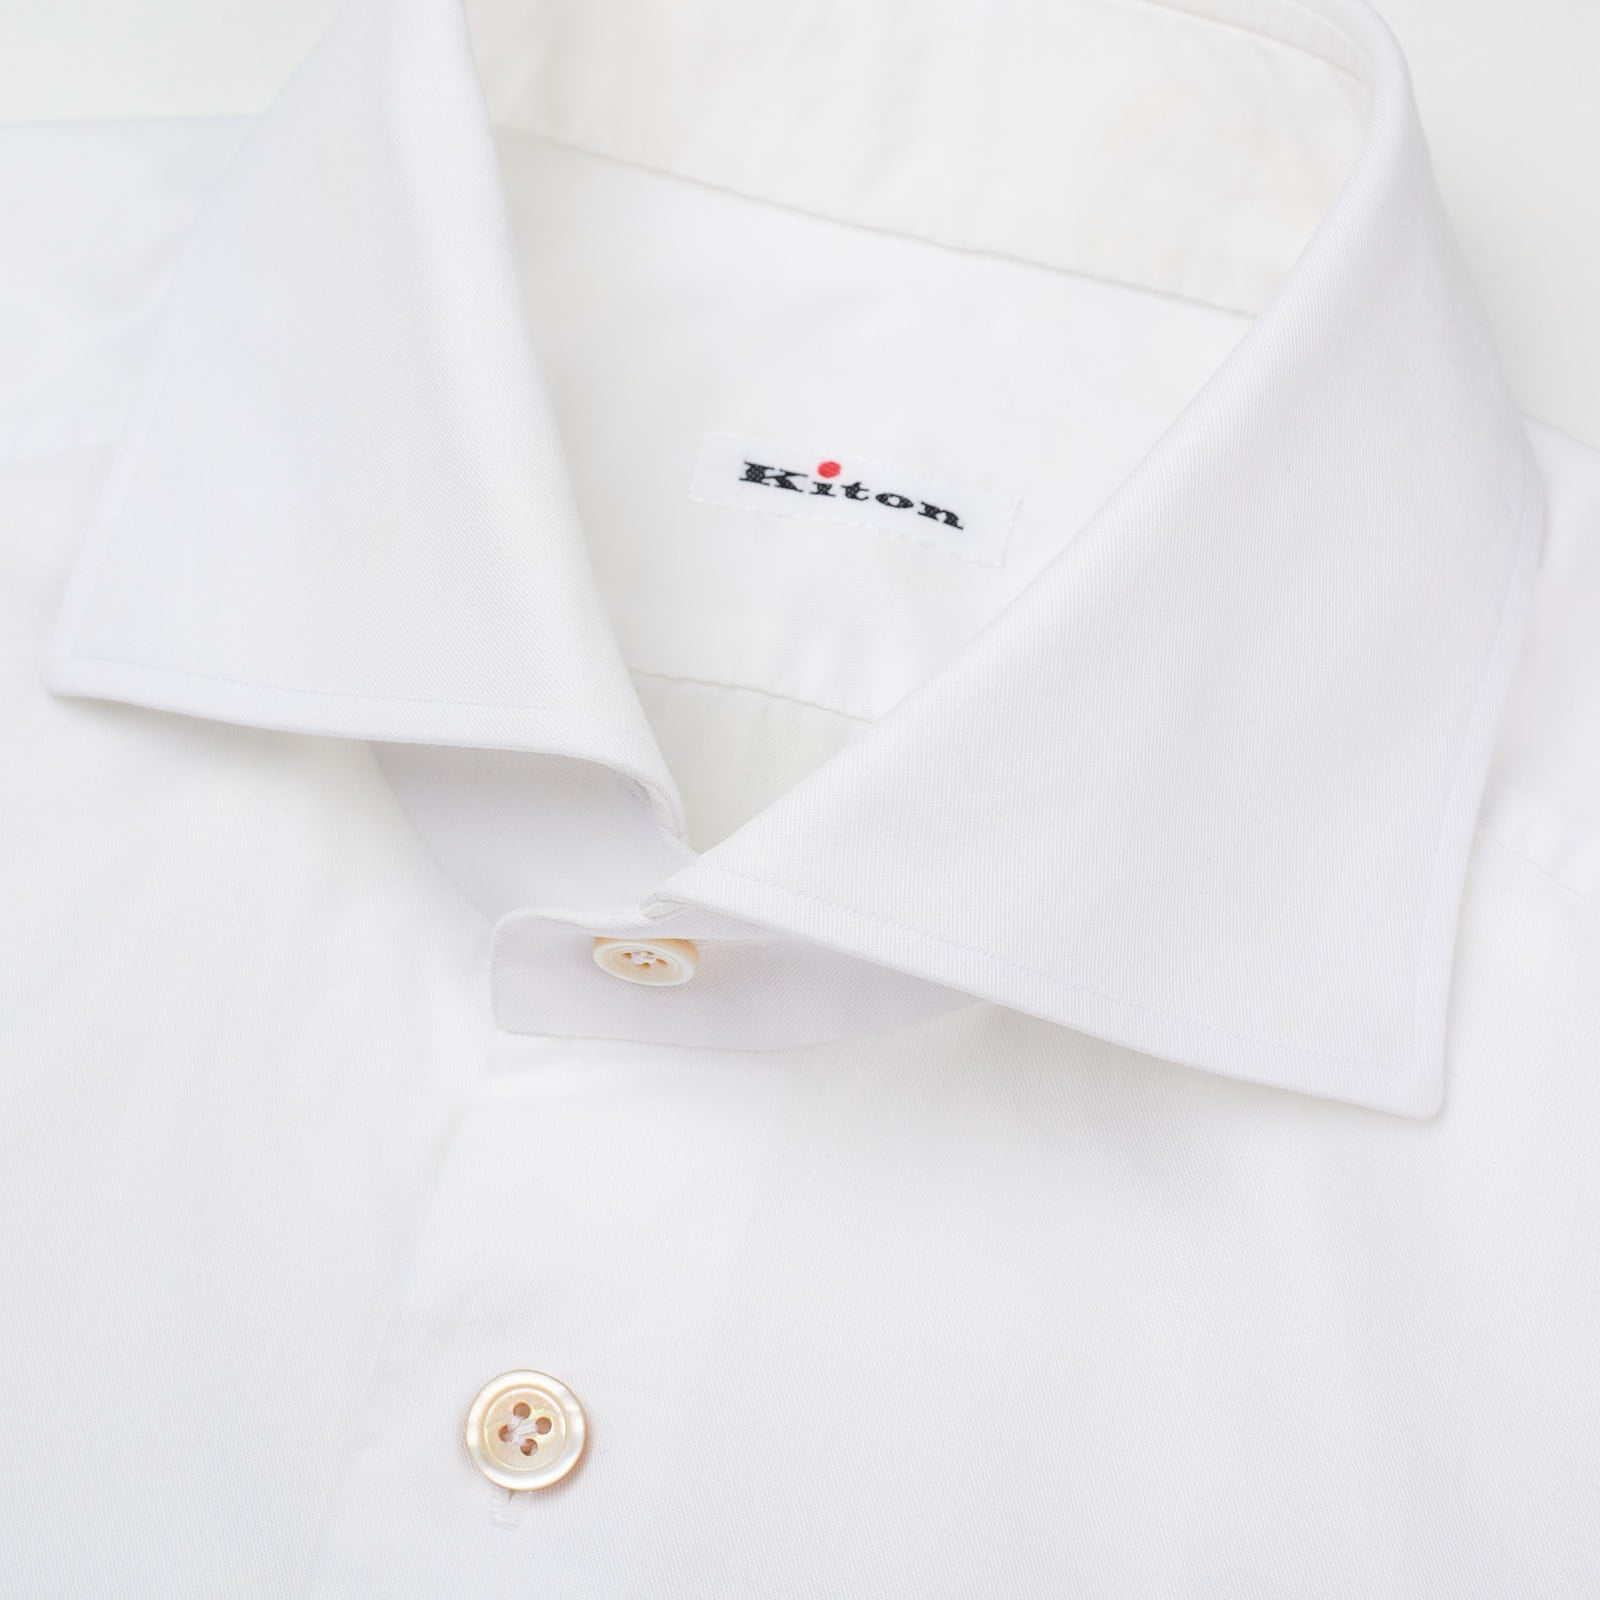 KITON Handmade Bespoke White Twill Cotton Dress Shirt EU 40 NEW US 15.75 KITON